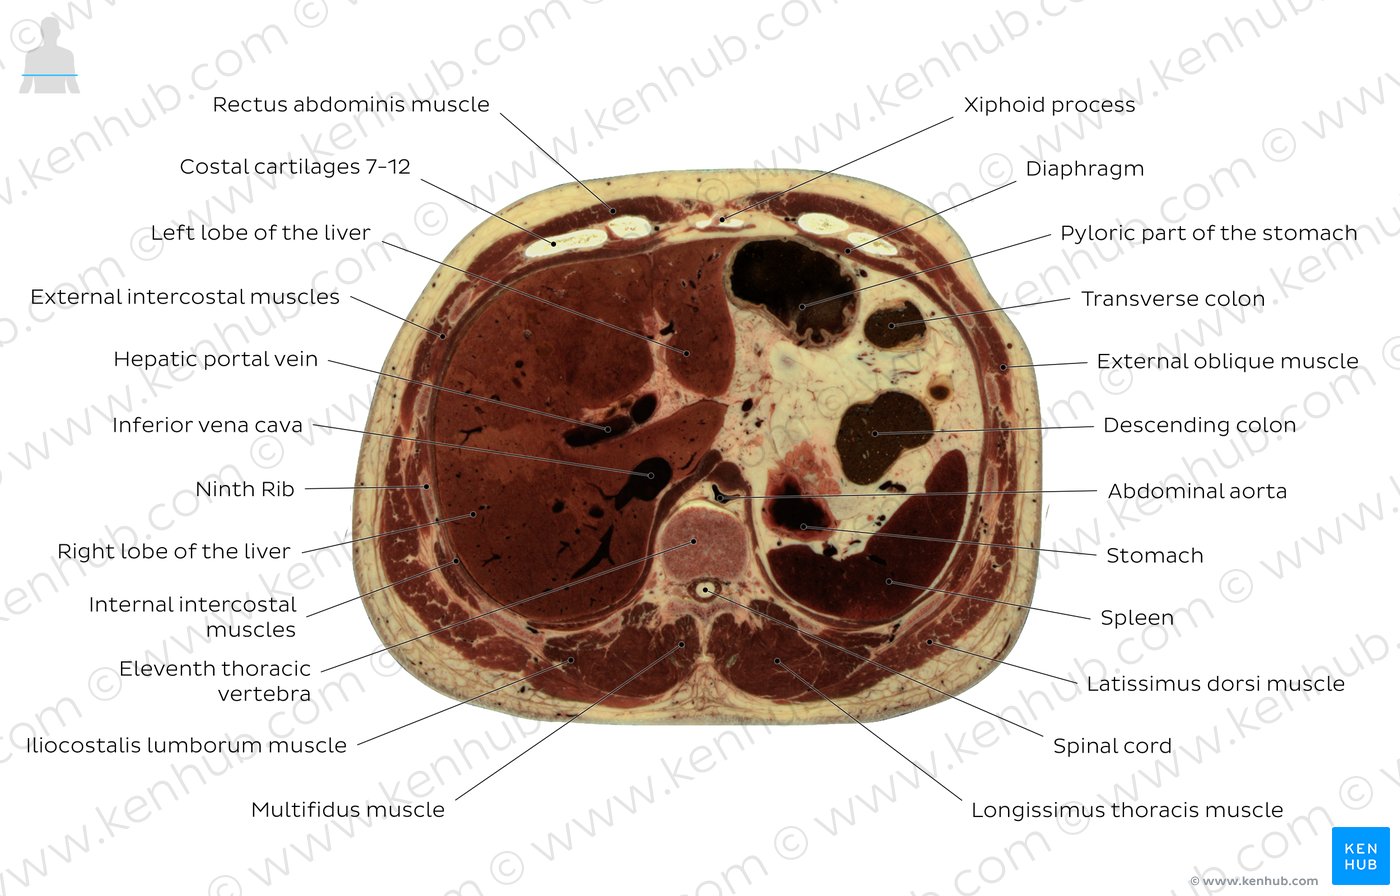 Cross section of the abdomen through T11: Diagram